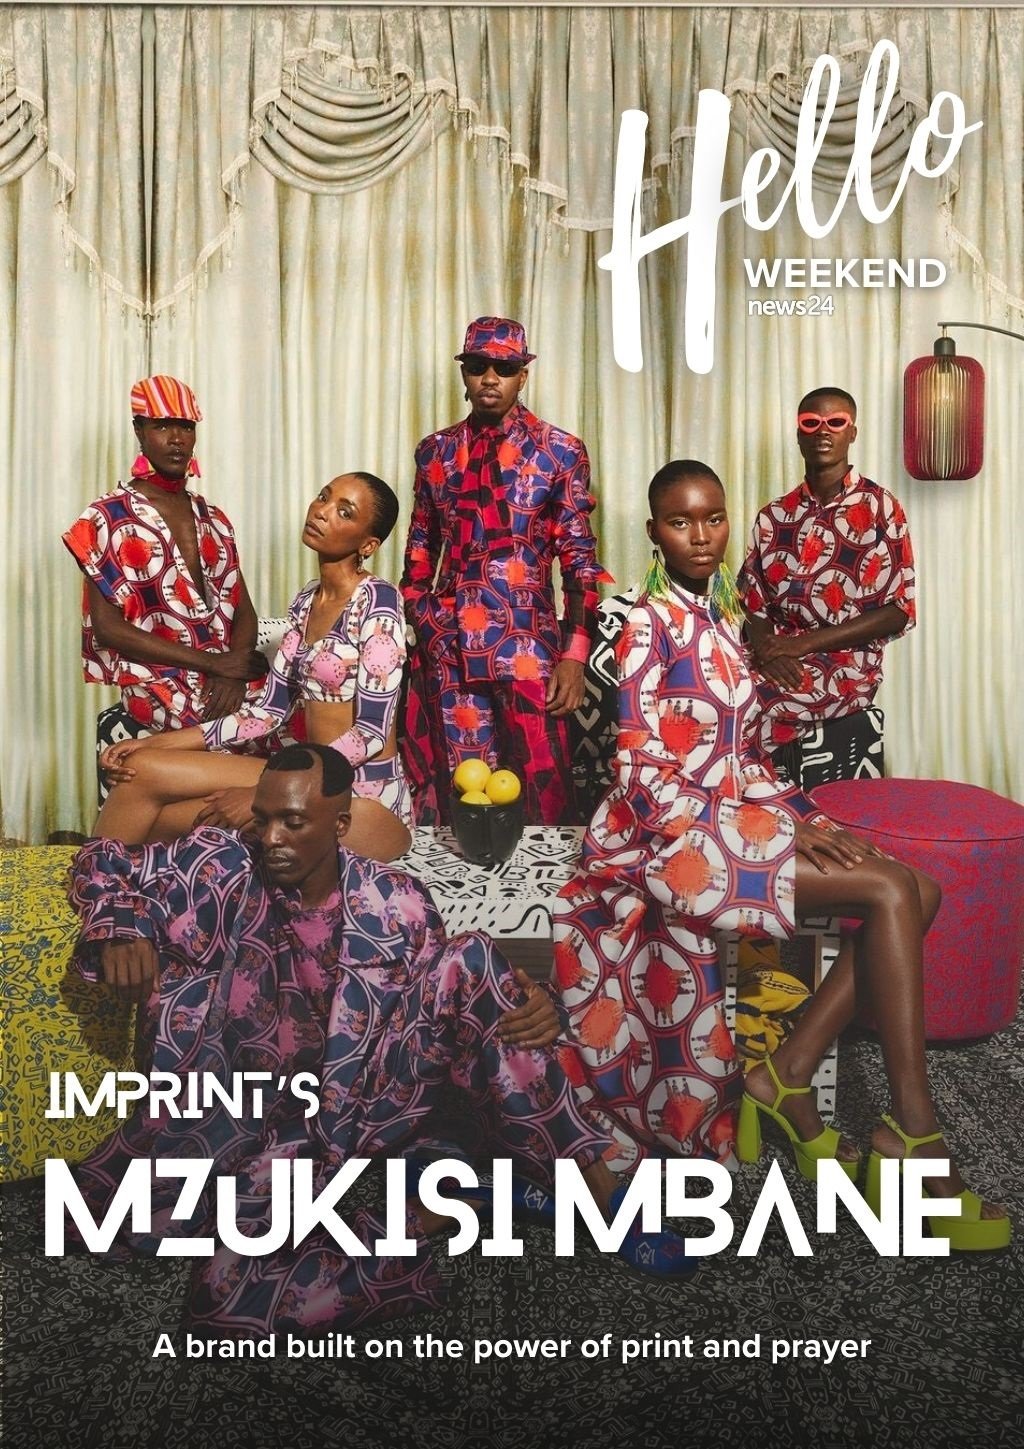 HELLO WEEKEND | Imprint designer Mzukisi Mbane is 